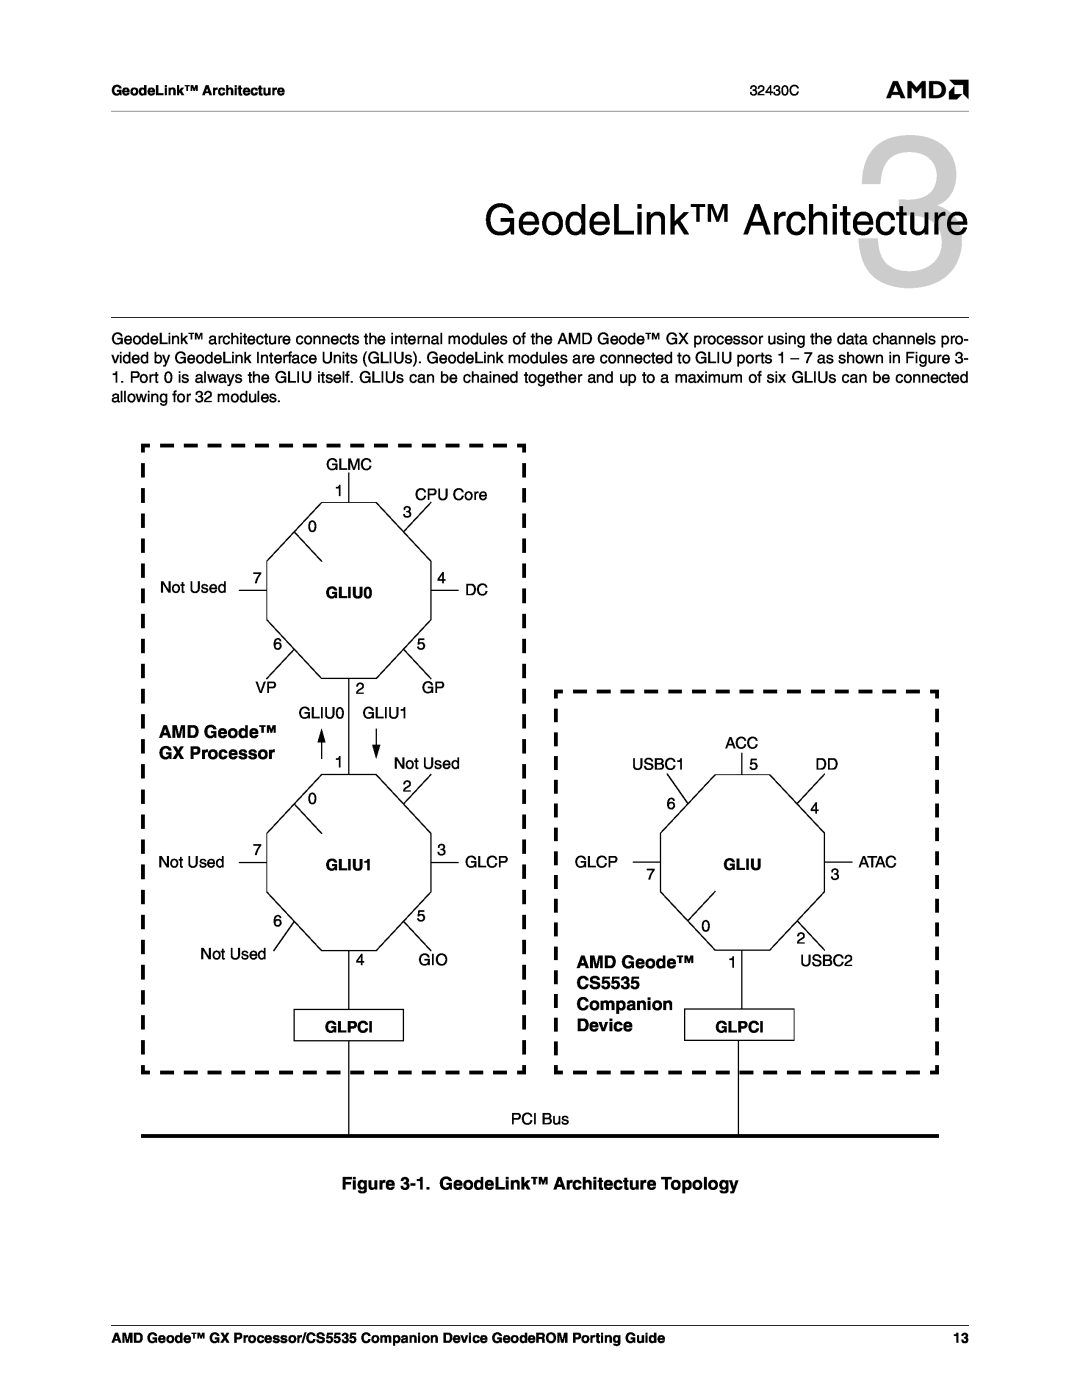 AMD CS5535 GeodeLink Architecture3, AMD Geode, GX Processor, Companion, Device, 1. GeodeLink Architecture Topology, GLIU0 